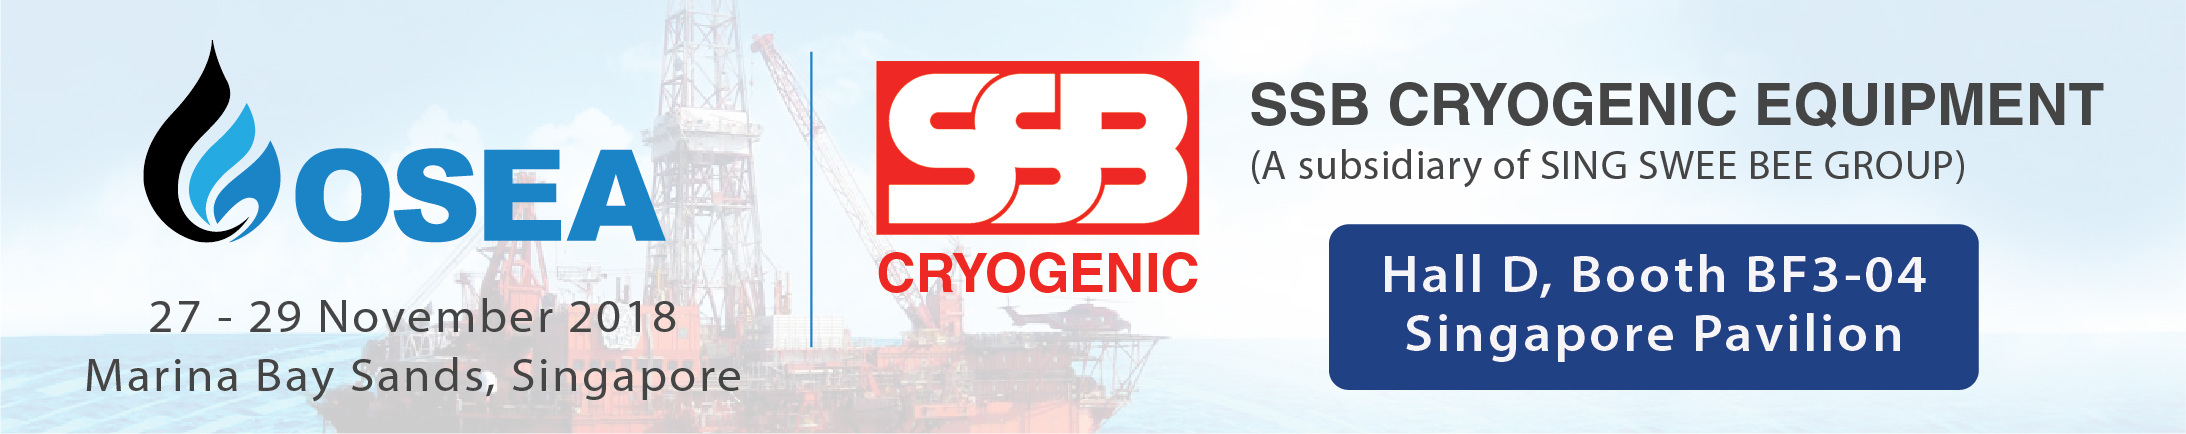 SSB Cryogenic Equipment in GIS 2018